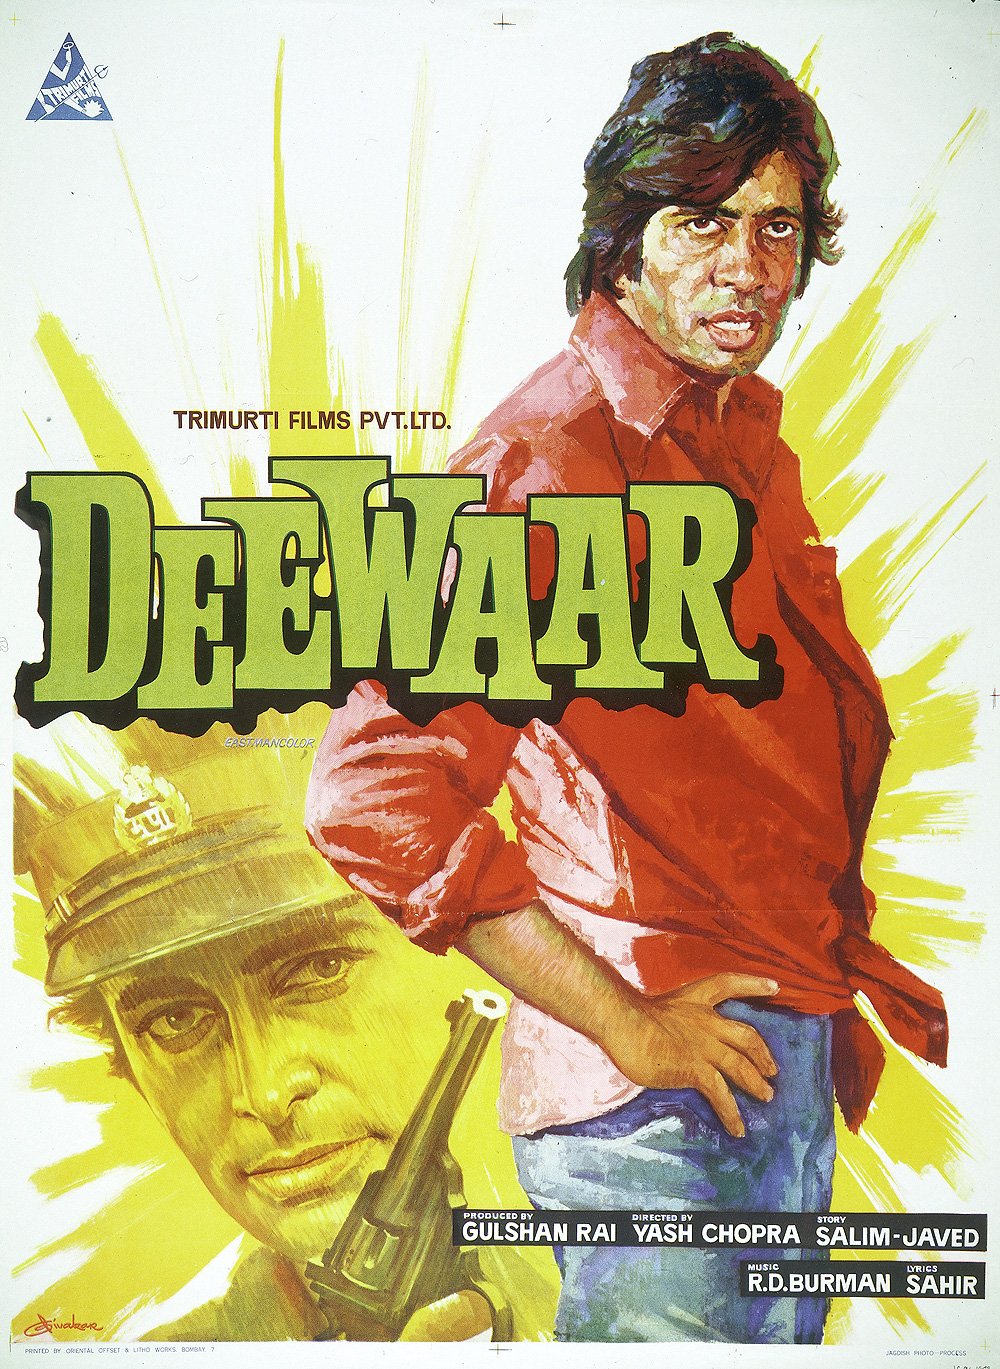 L'affiche originale du film Deewaar en Hindi